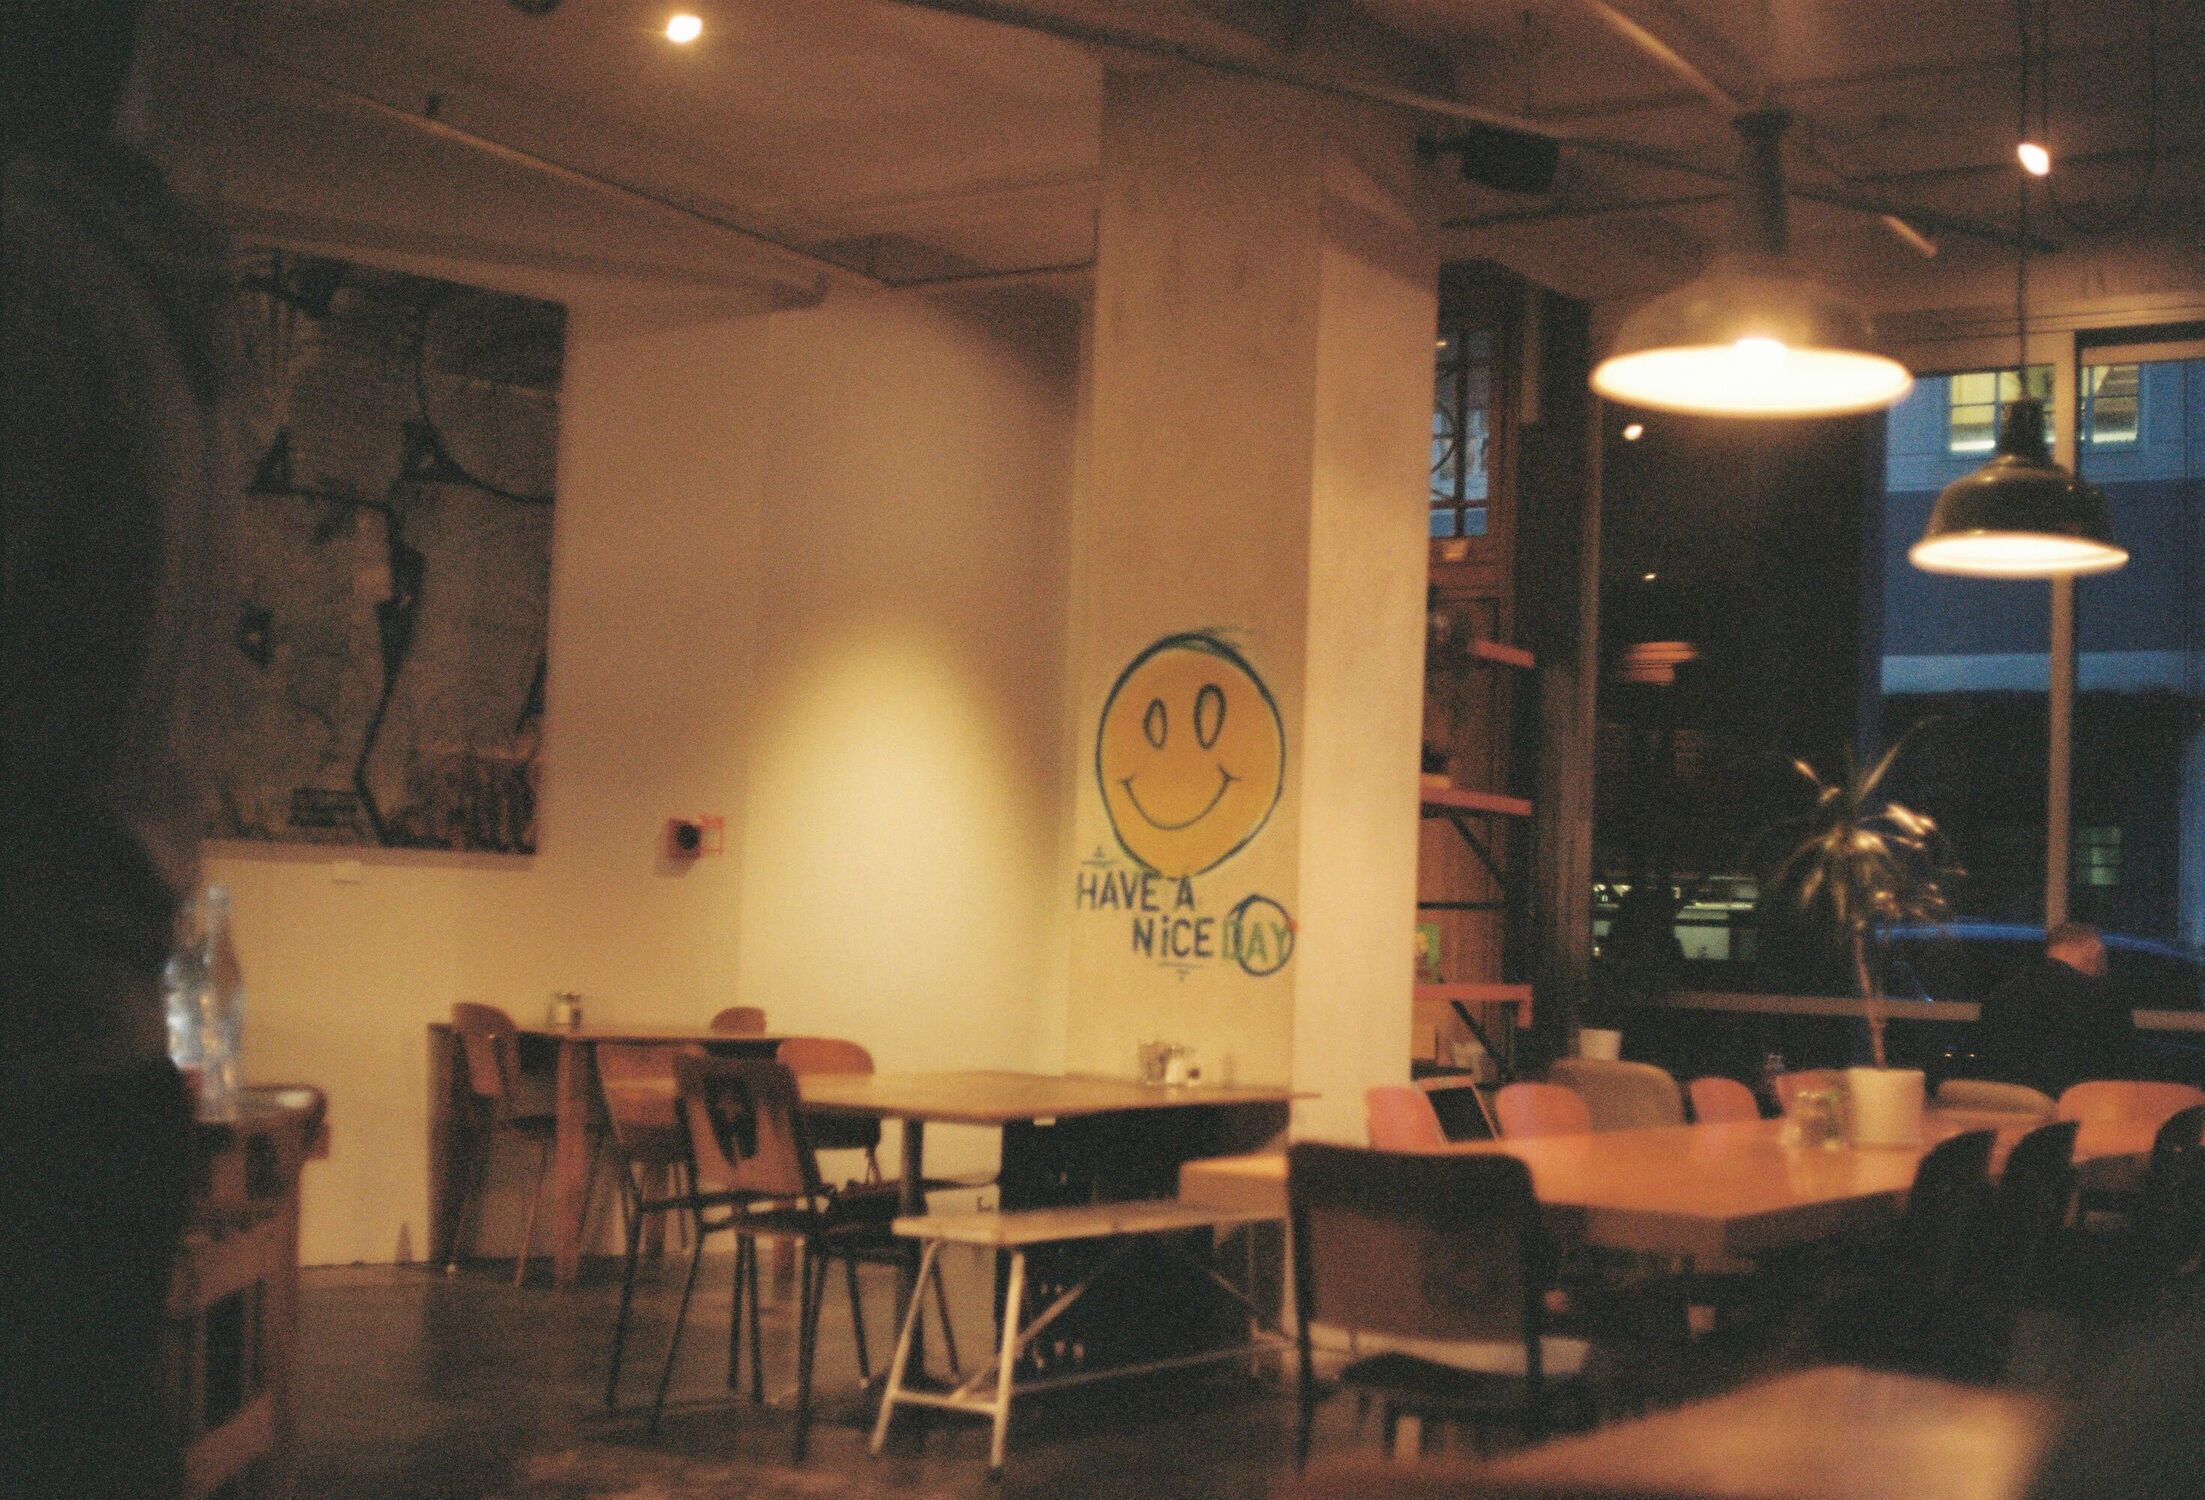 A blurry cafe